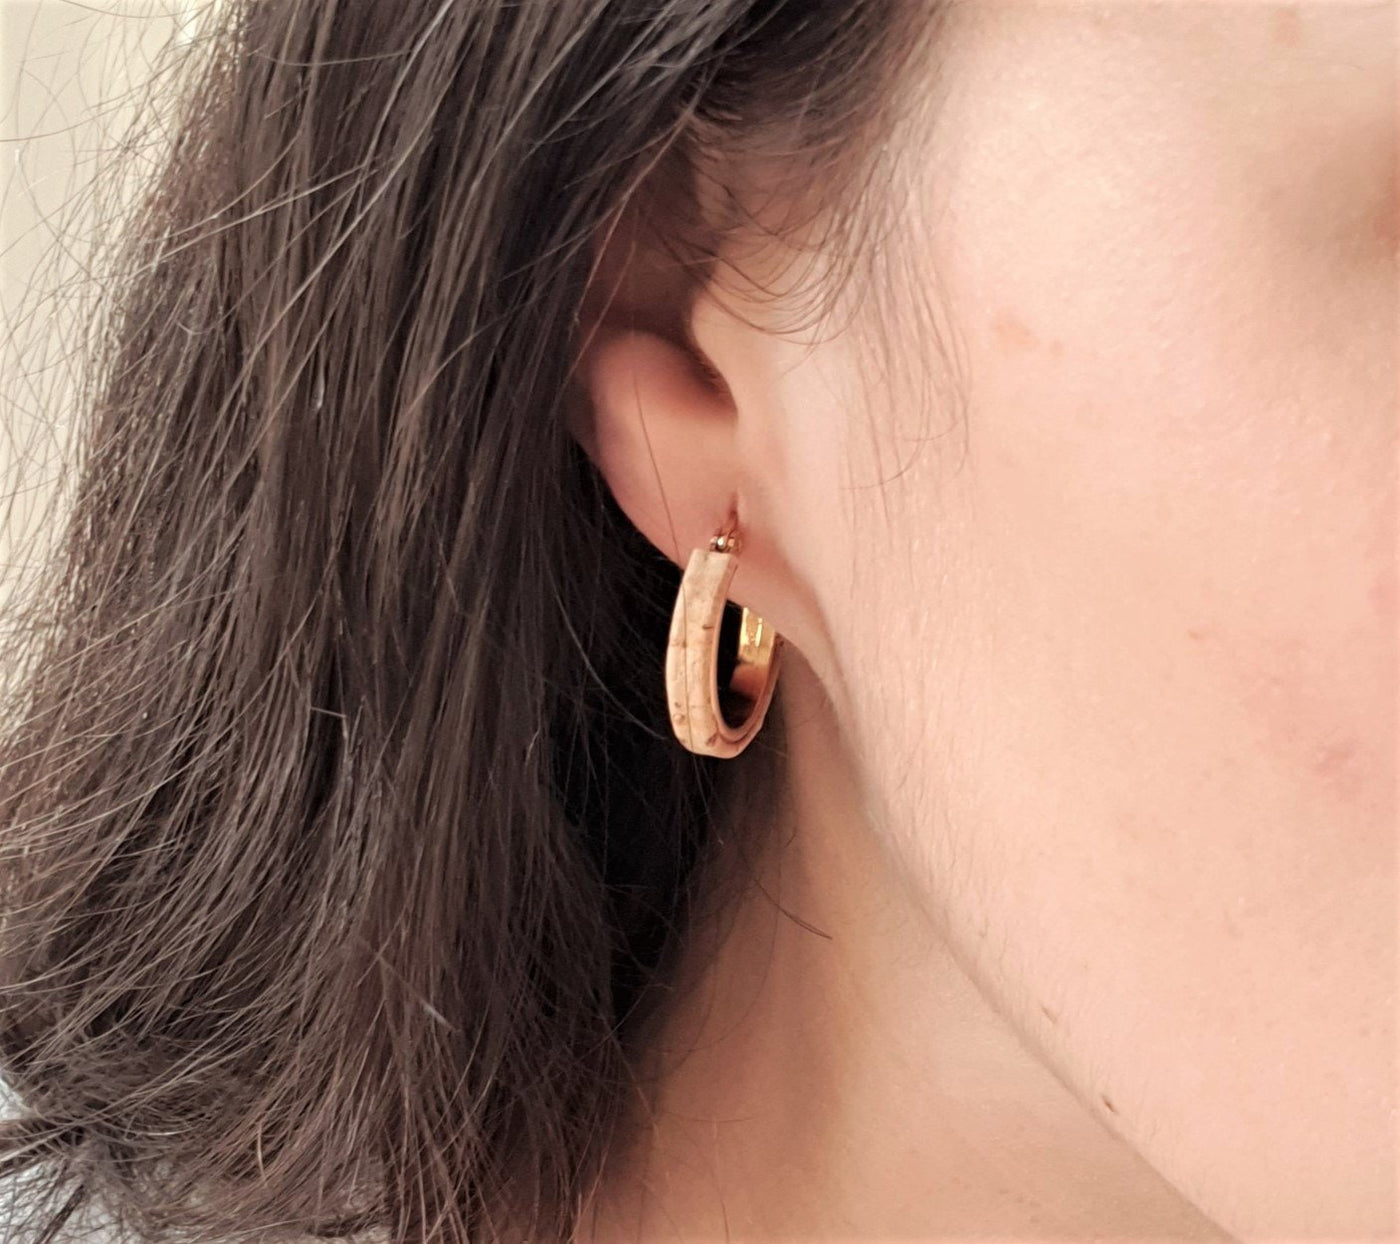 Small hoop cork earrings gold steel earrings Portuguese cork hoops cork gold earrings cork jewelry vegan leather earrings, small hoops